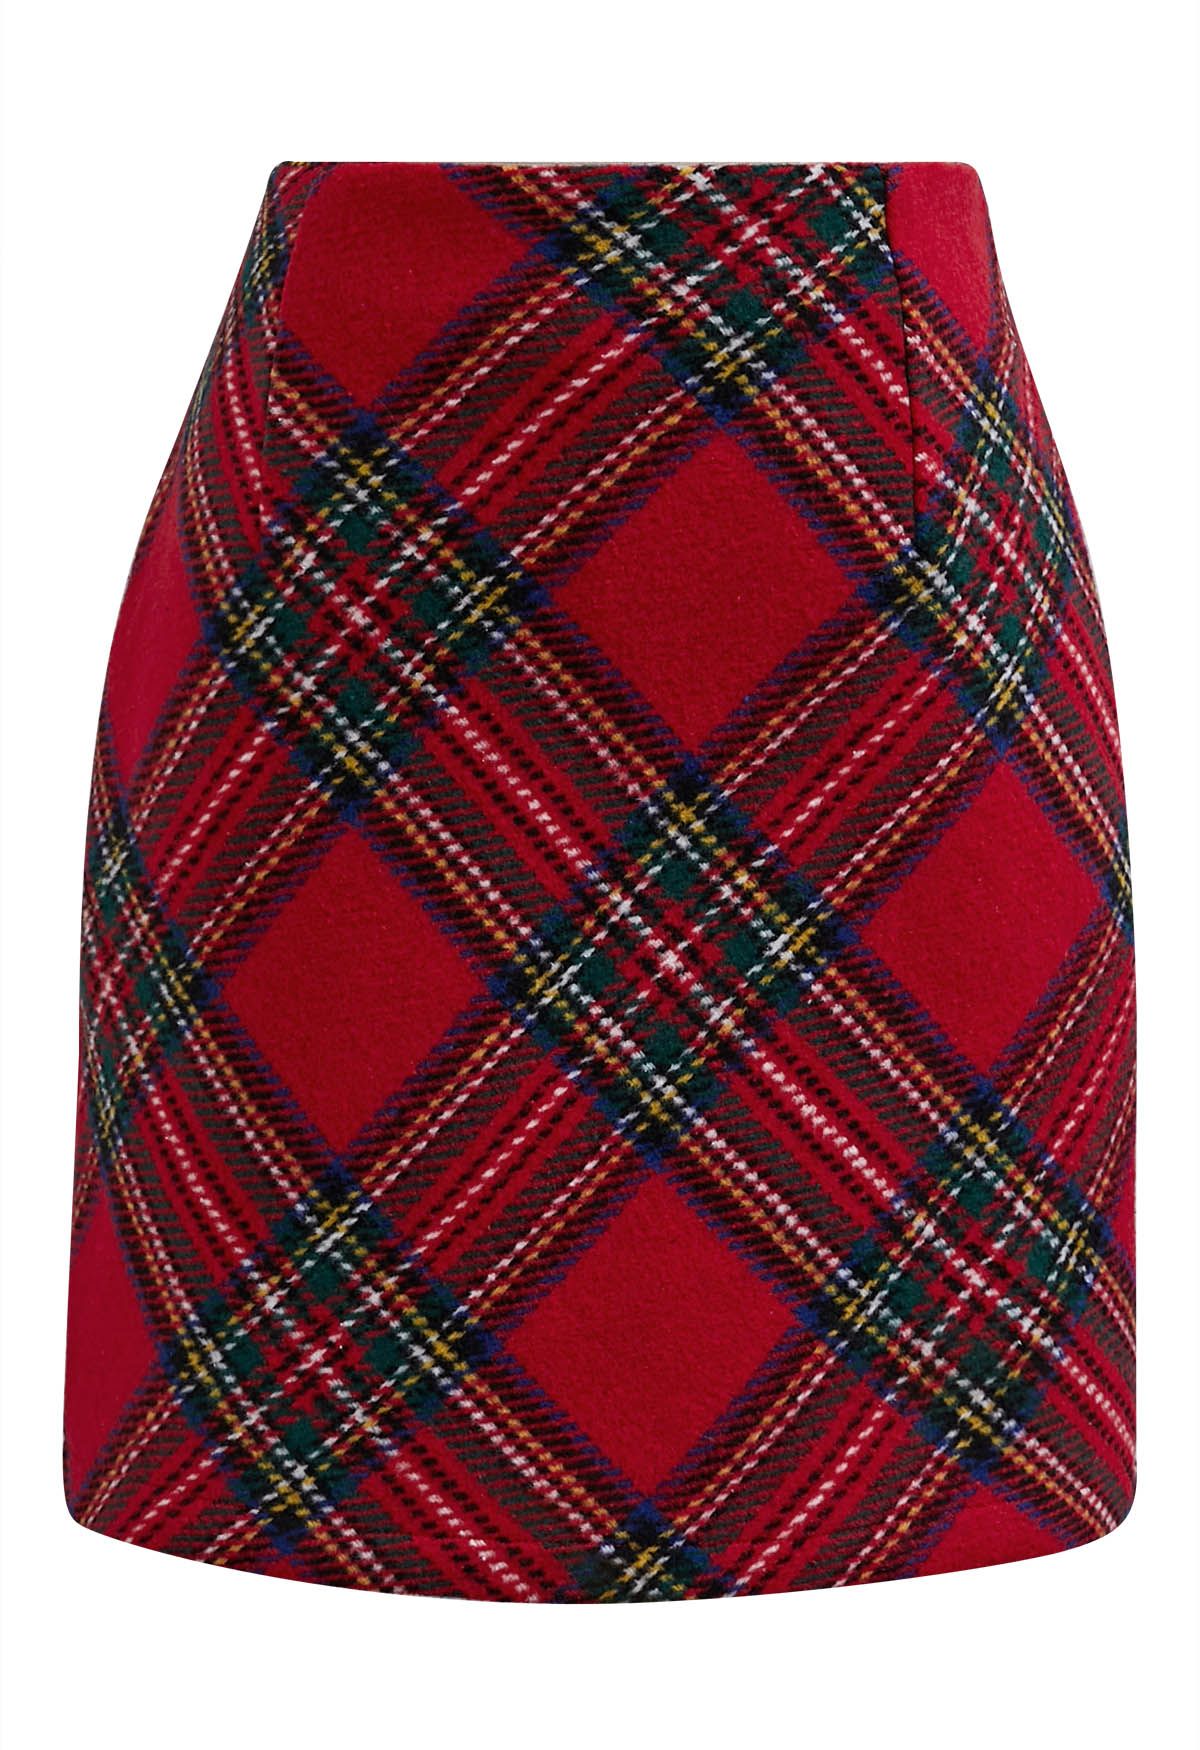 Minifalda Bud de mezcla de lana y tartán rojo